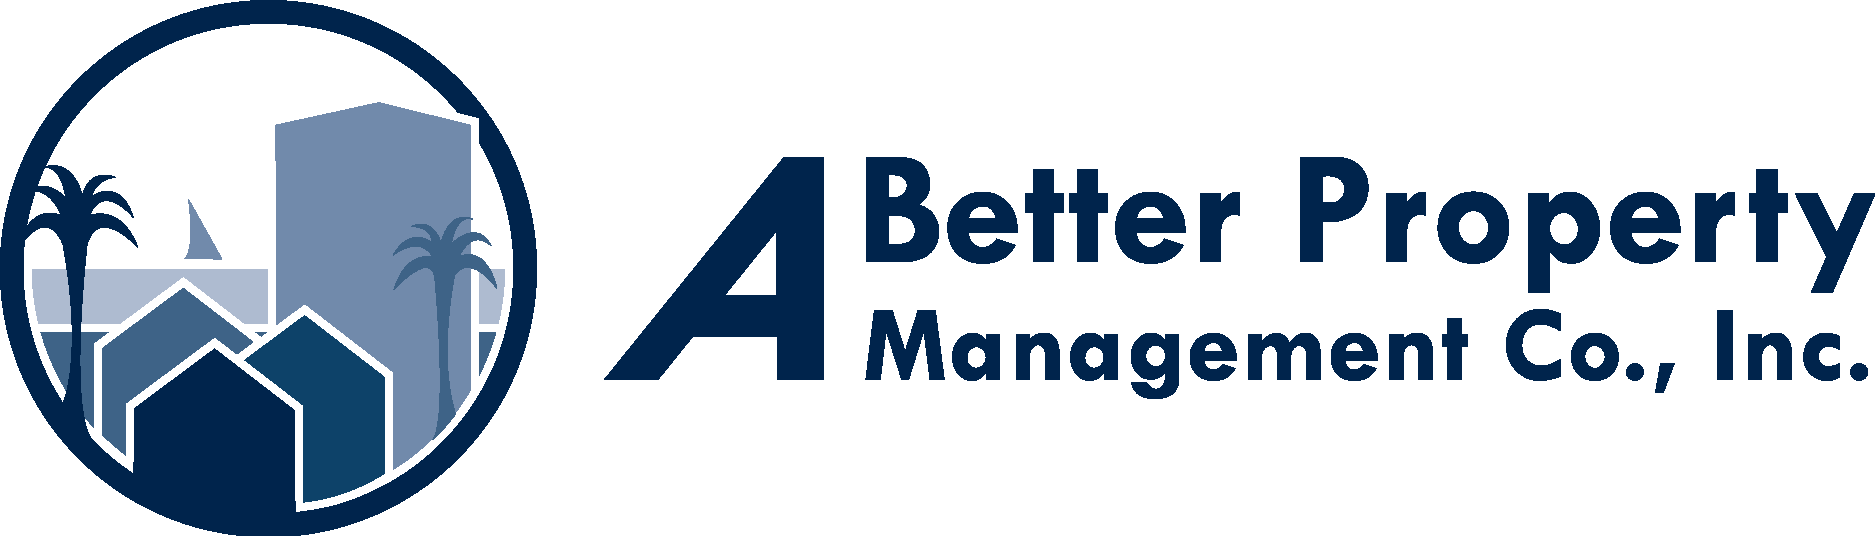 A Better Property Management Co. Logo Vector